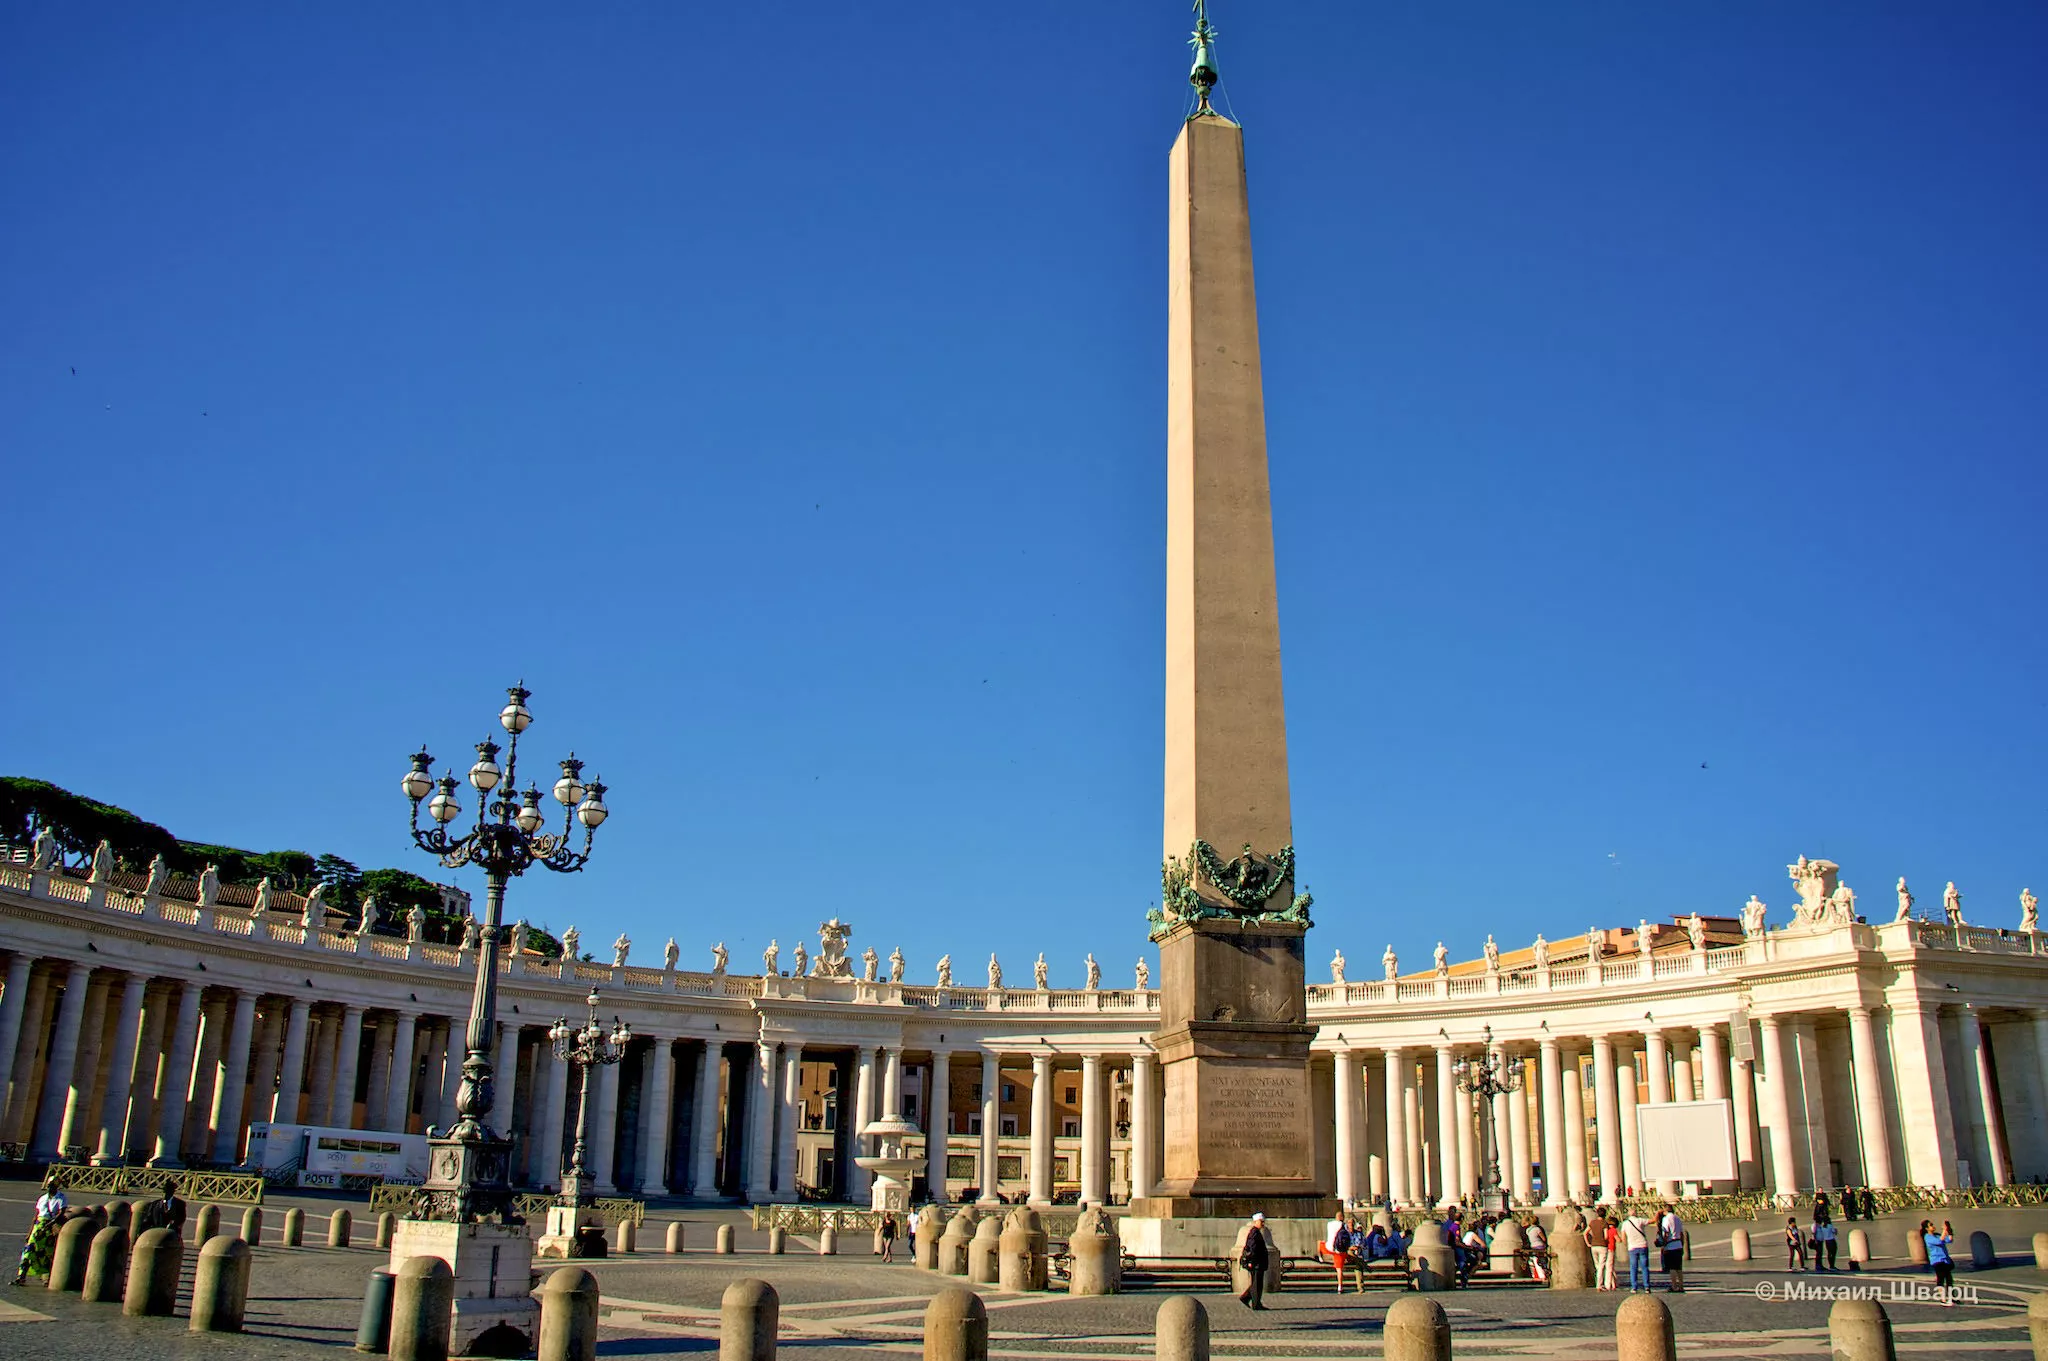 Vatican Obelisk in Vatican, Europe | Monuments - Rated 3.8